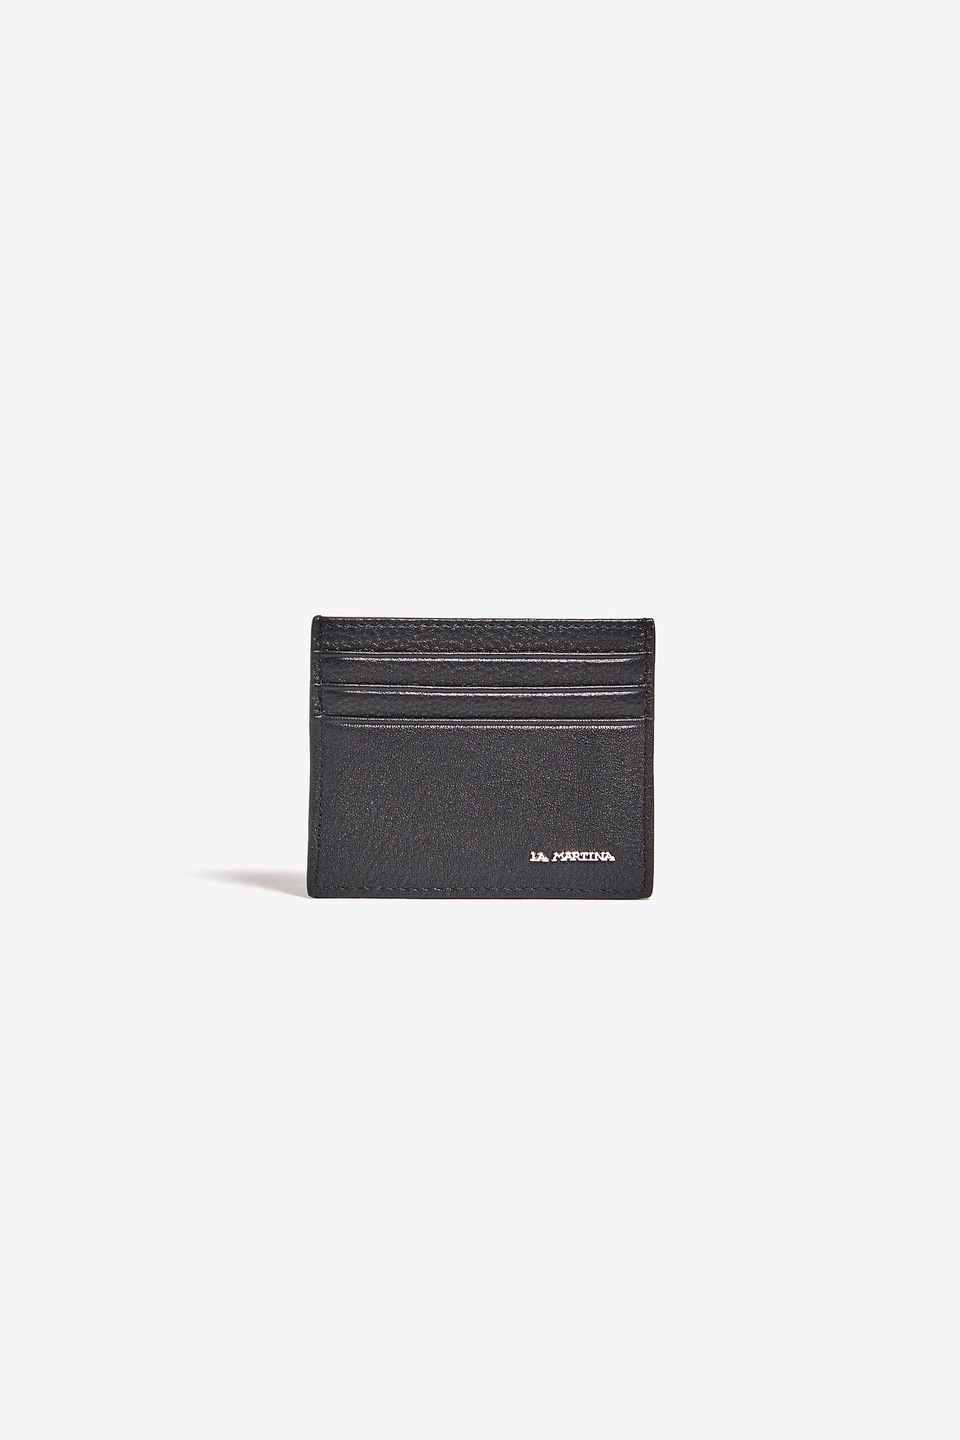 Plain-coloured leather card holder | La Martina - Official Online Shop